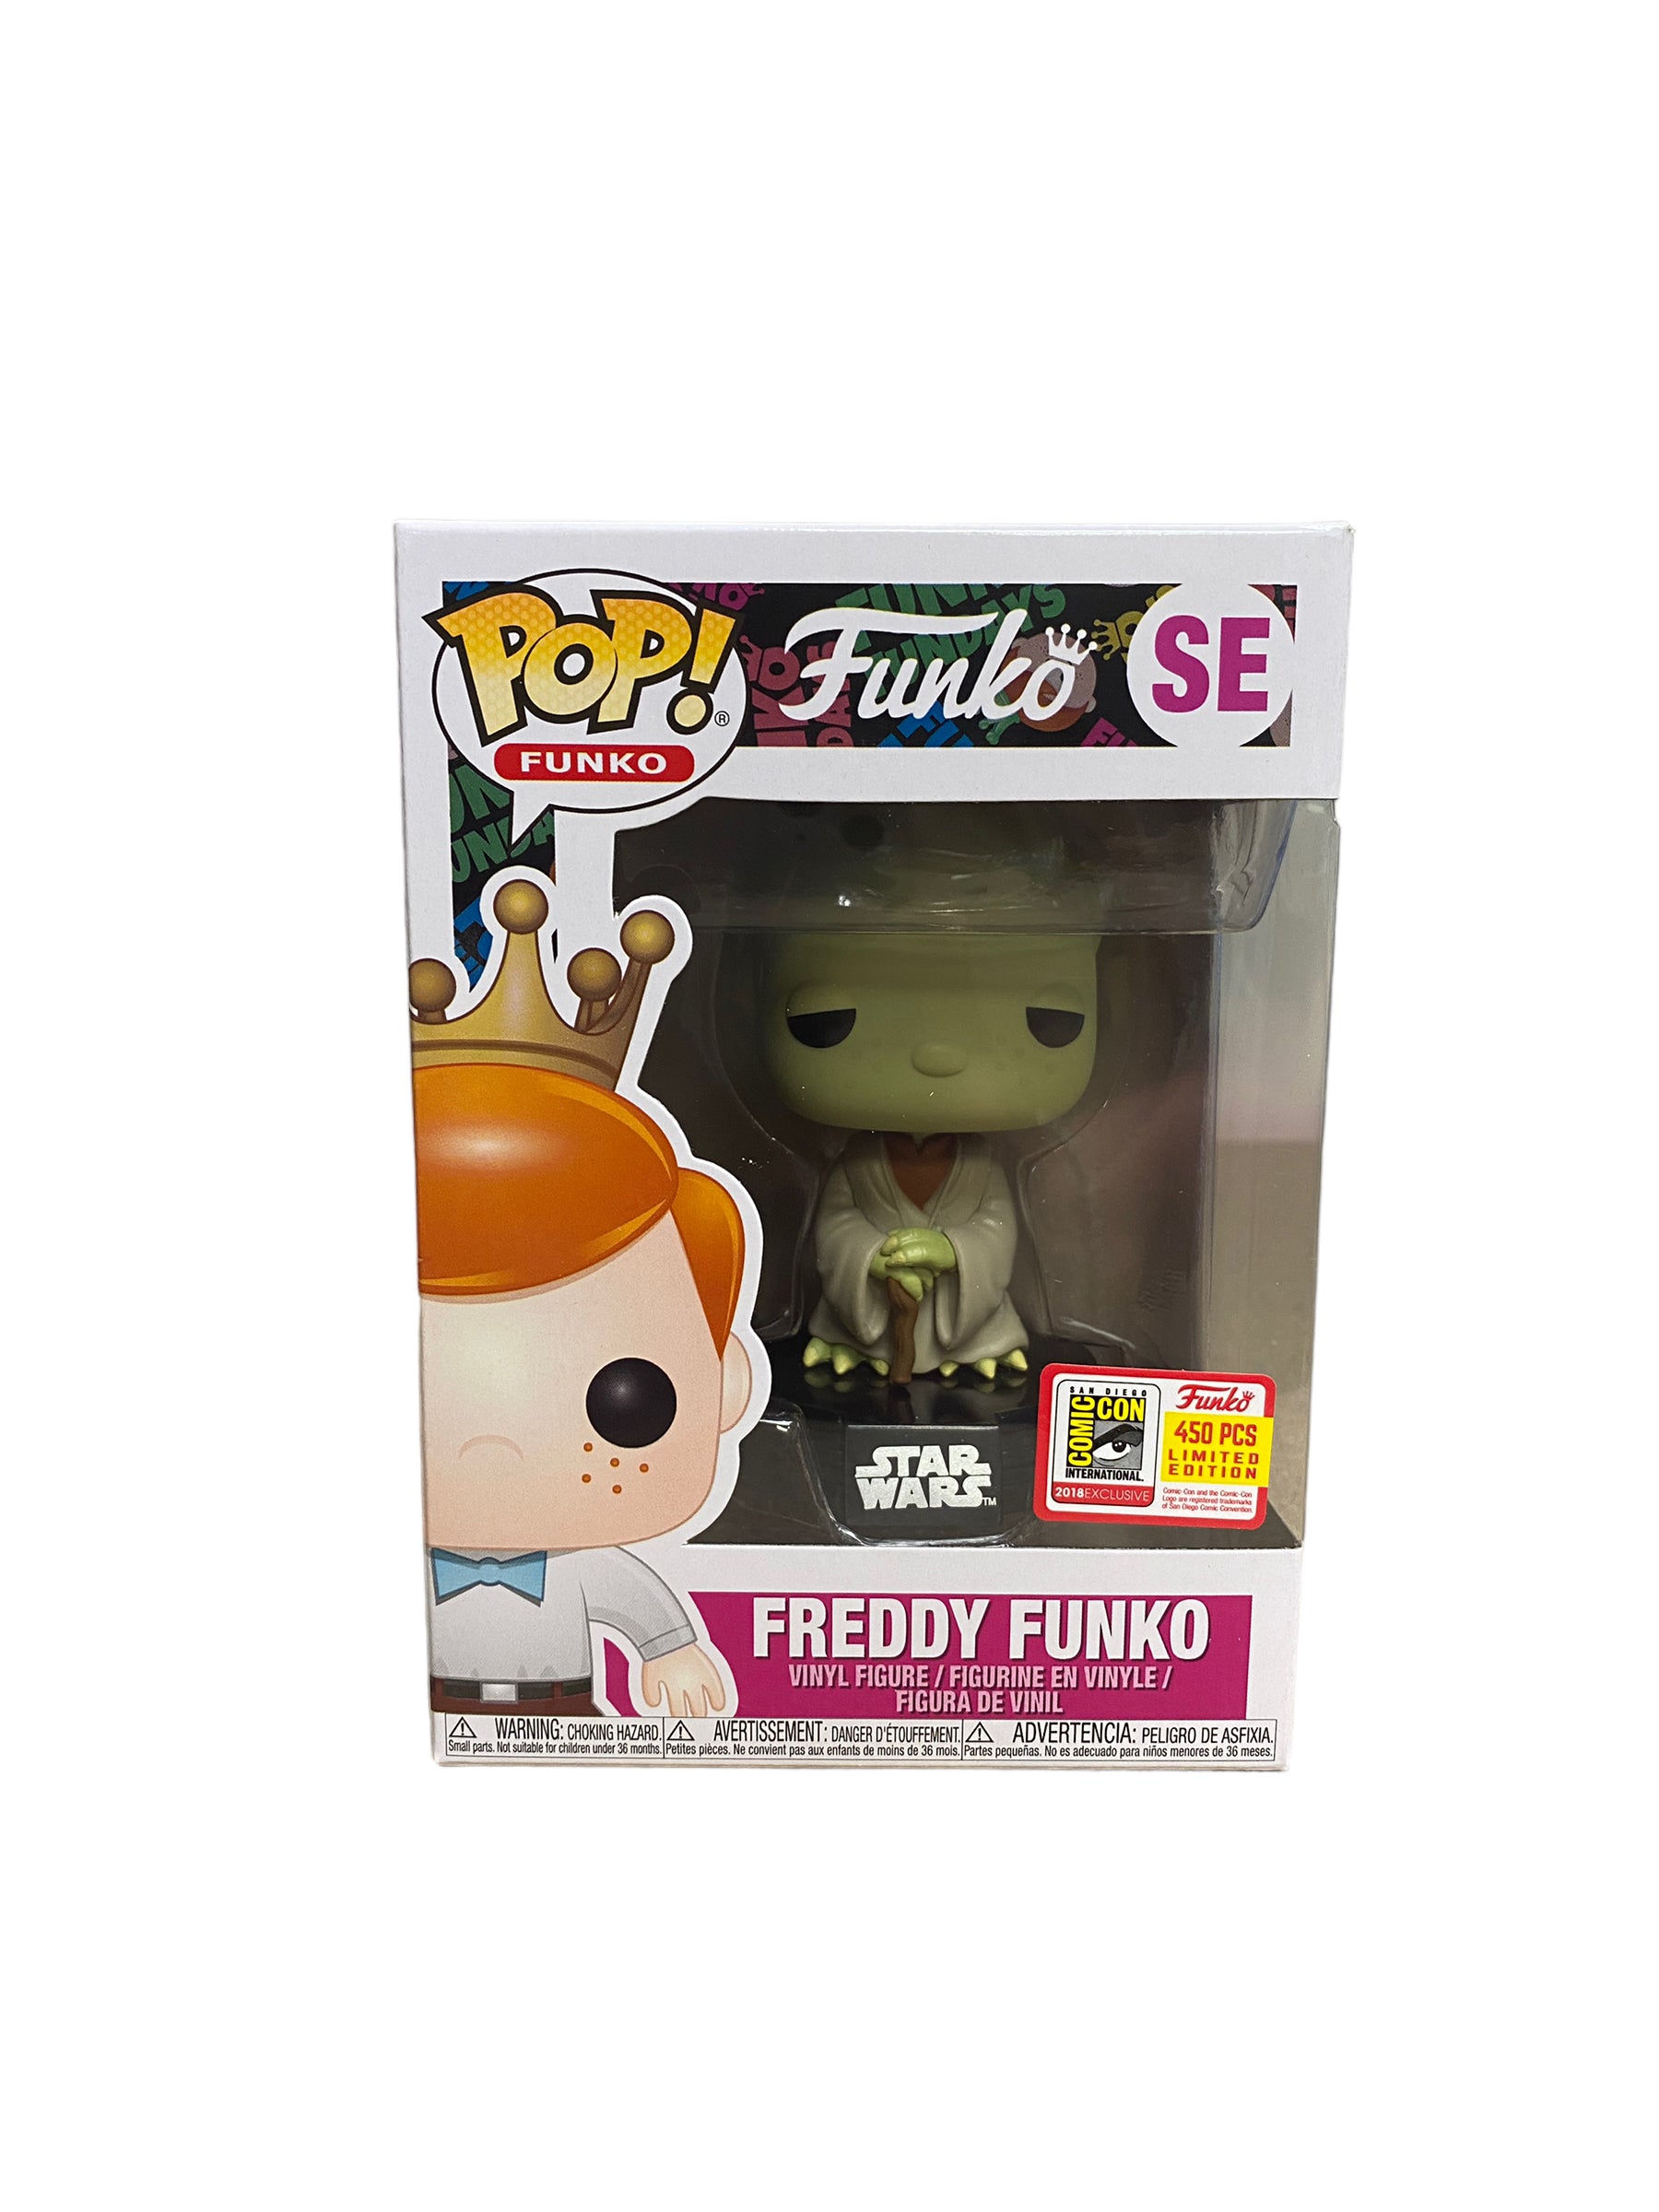 Freddy Funko as Yoda Funko Pop! -  SDCC 2018 LE450 Pcs - Condition 8/10